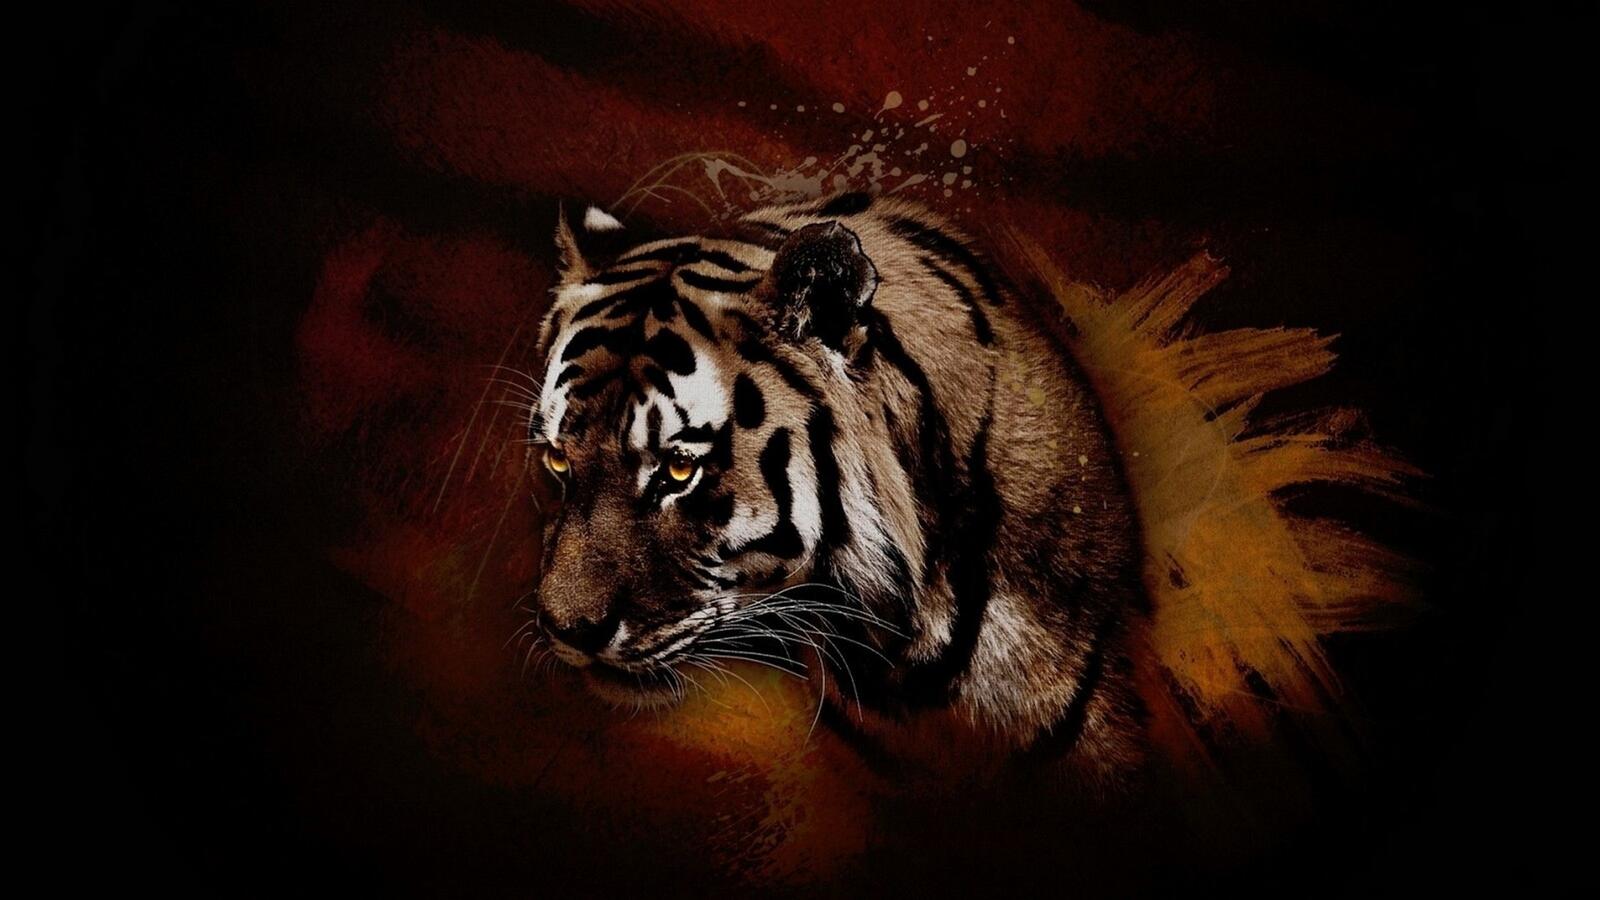 Wallpapers cat tiger predator on the desktop